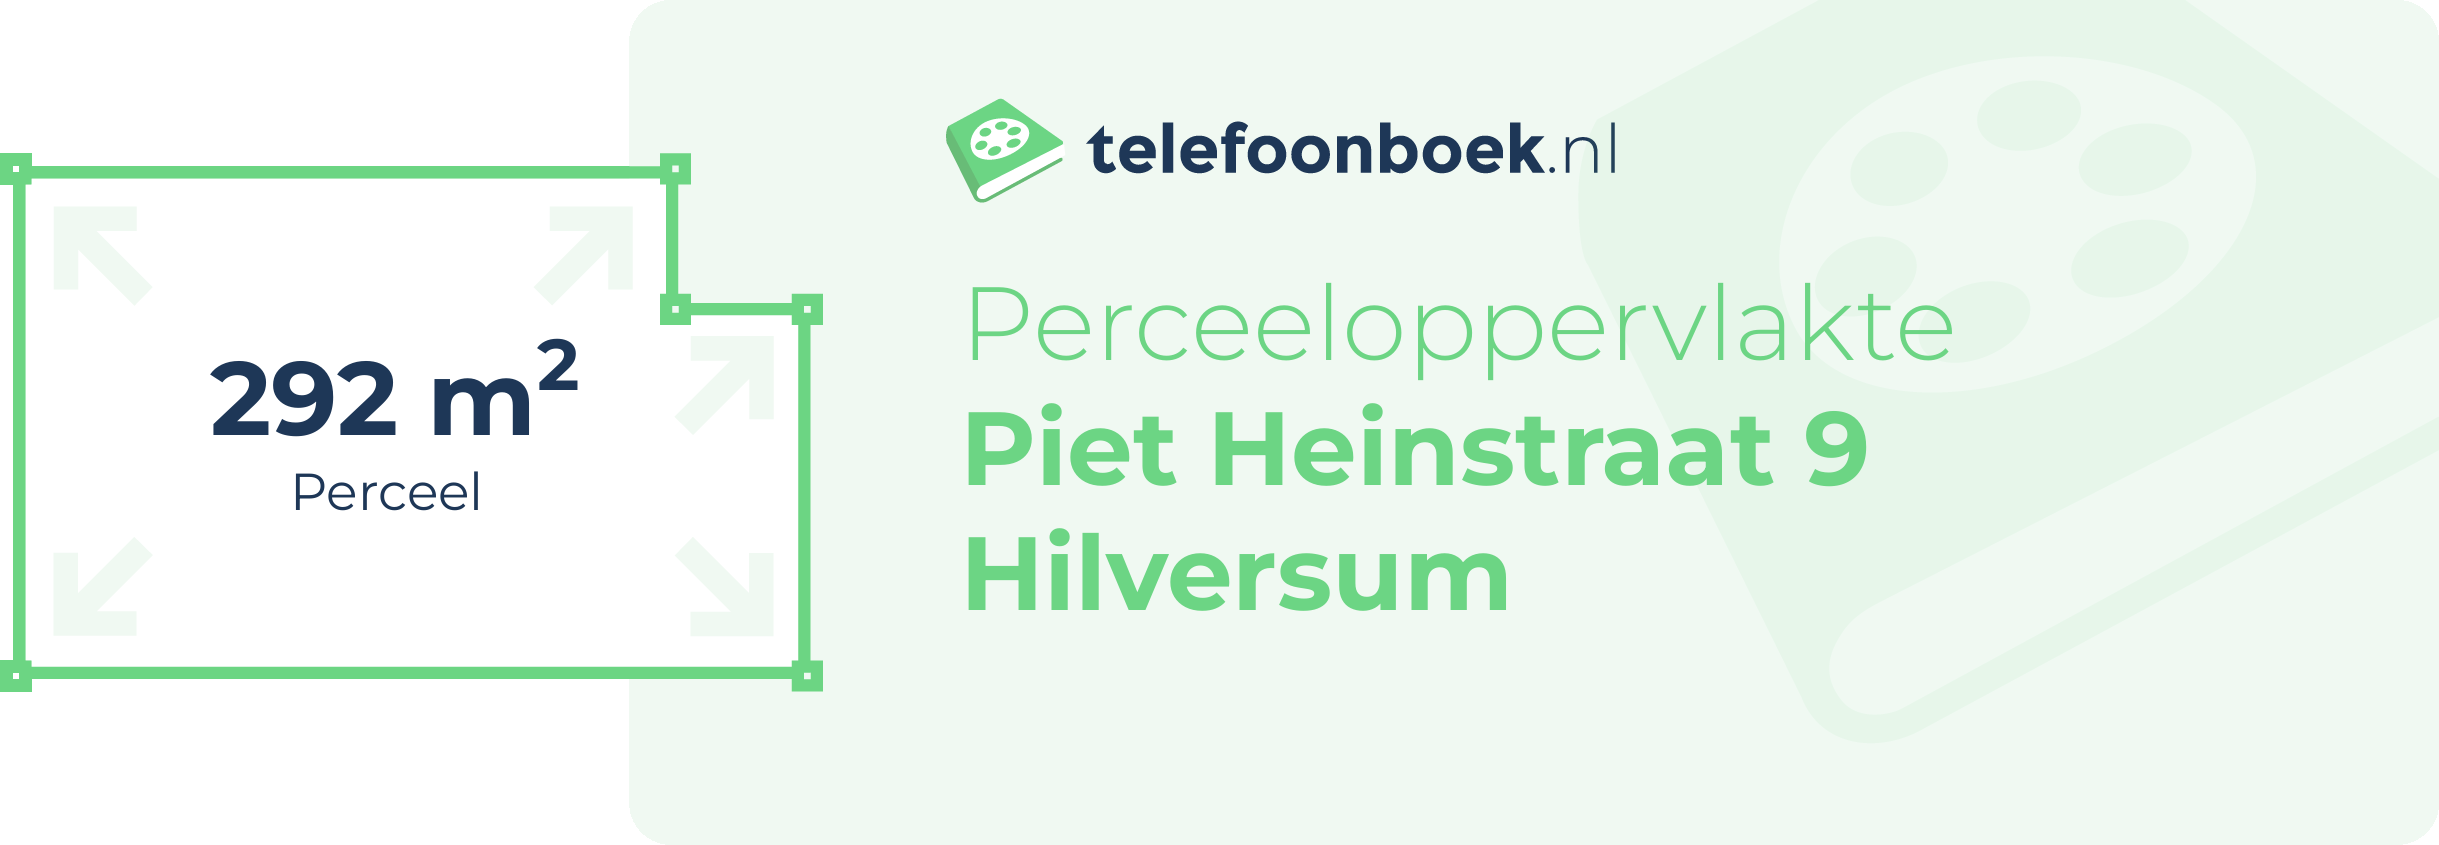 Perceeloppervlakte Piet Heinstraat 9 Hilversum